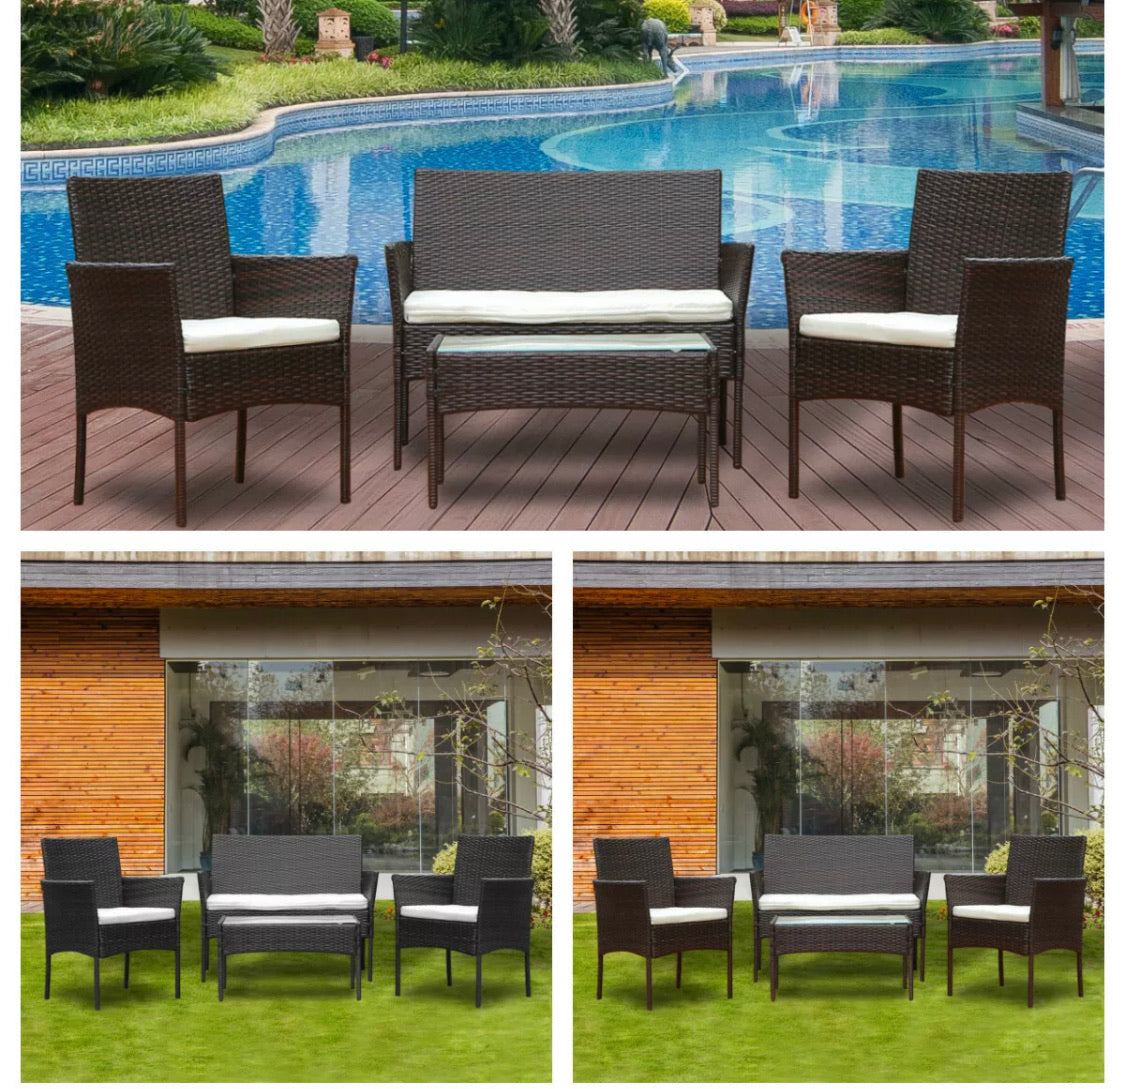 Patio 4 PCS Wicker Furniture Outdoor Rattan Sofa Table Garden Conversation Set